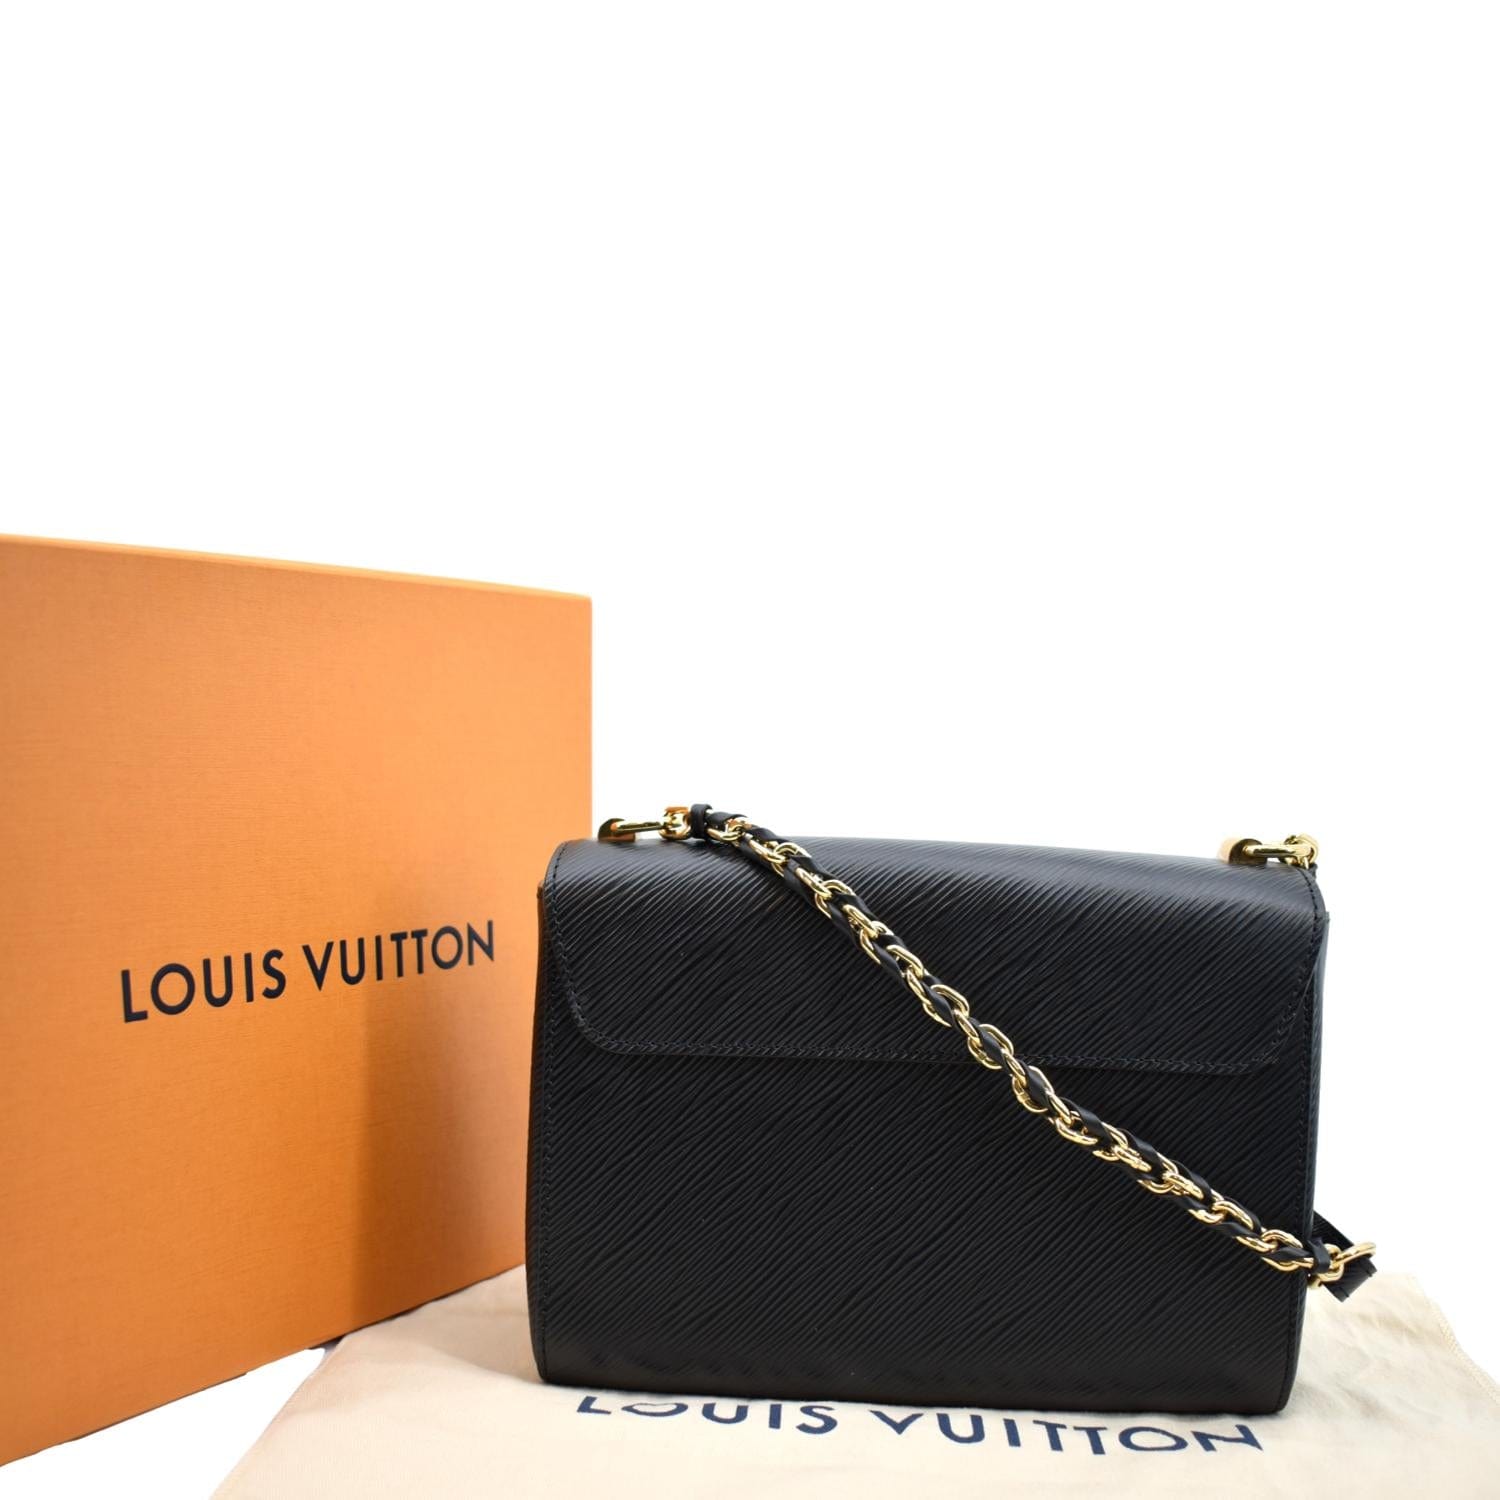 LV Twist belt chain wallet leather CROSSBODY BAG, Luxury, Bags